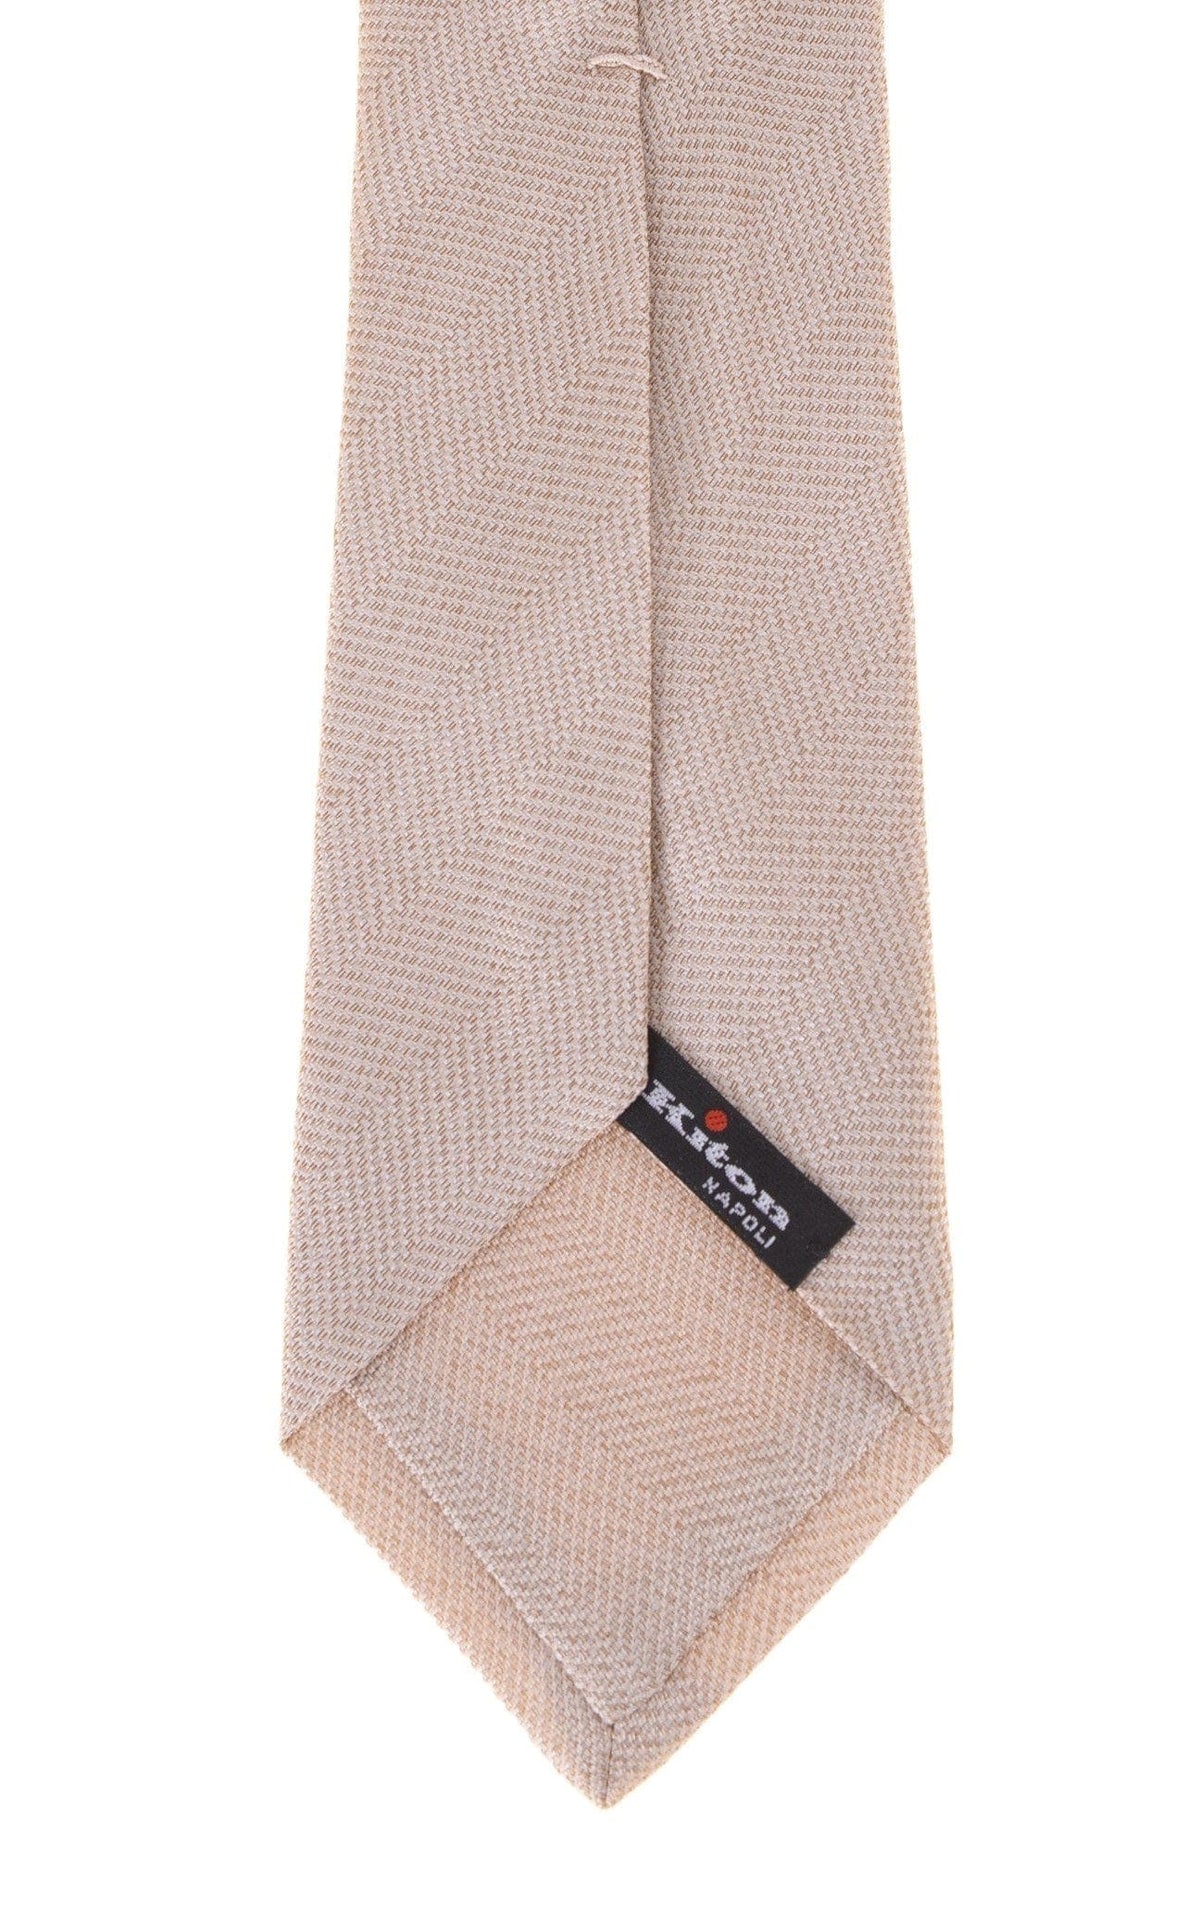 Kiton Napoli Mens Tan Textured Seven Fold Handmade Silk Necktie - The Suit Depot